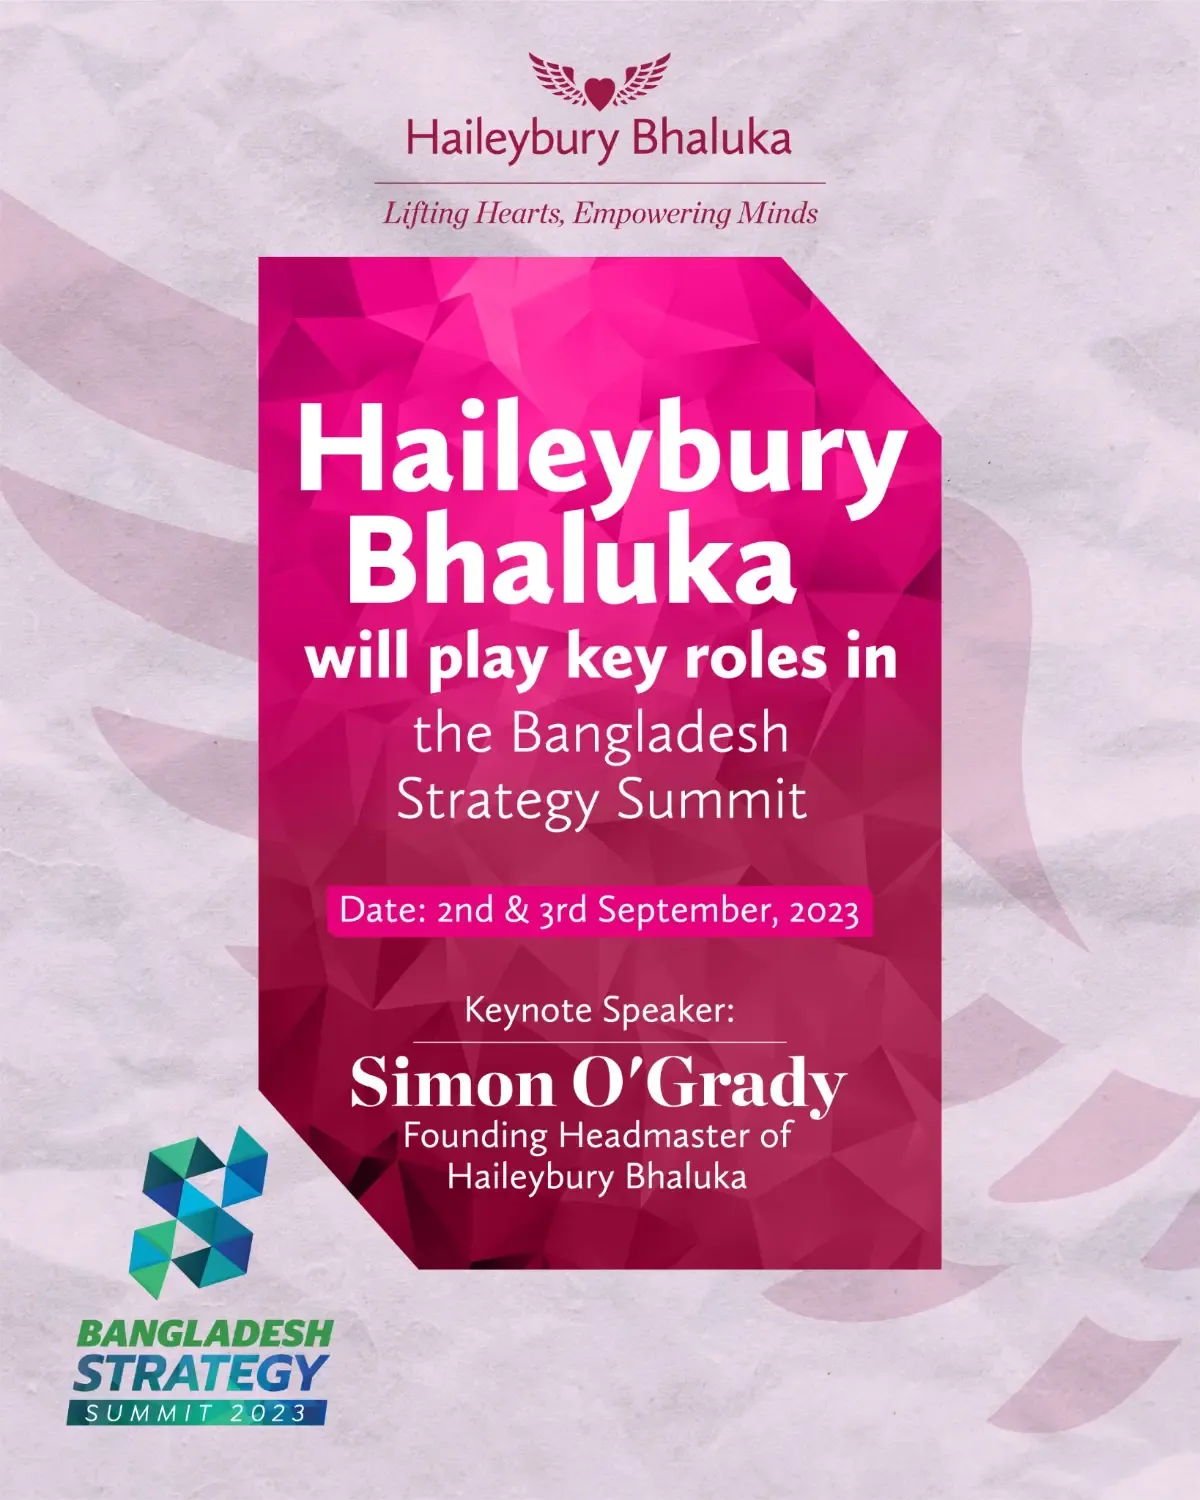 Haileybury Bhaluka will be there on the Bangladesh Strategy Summit.